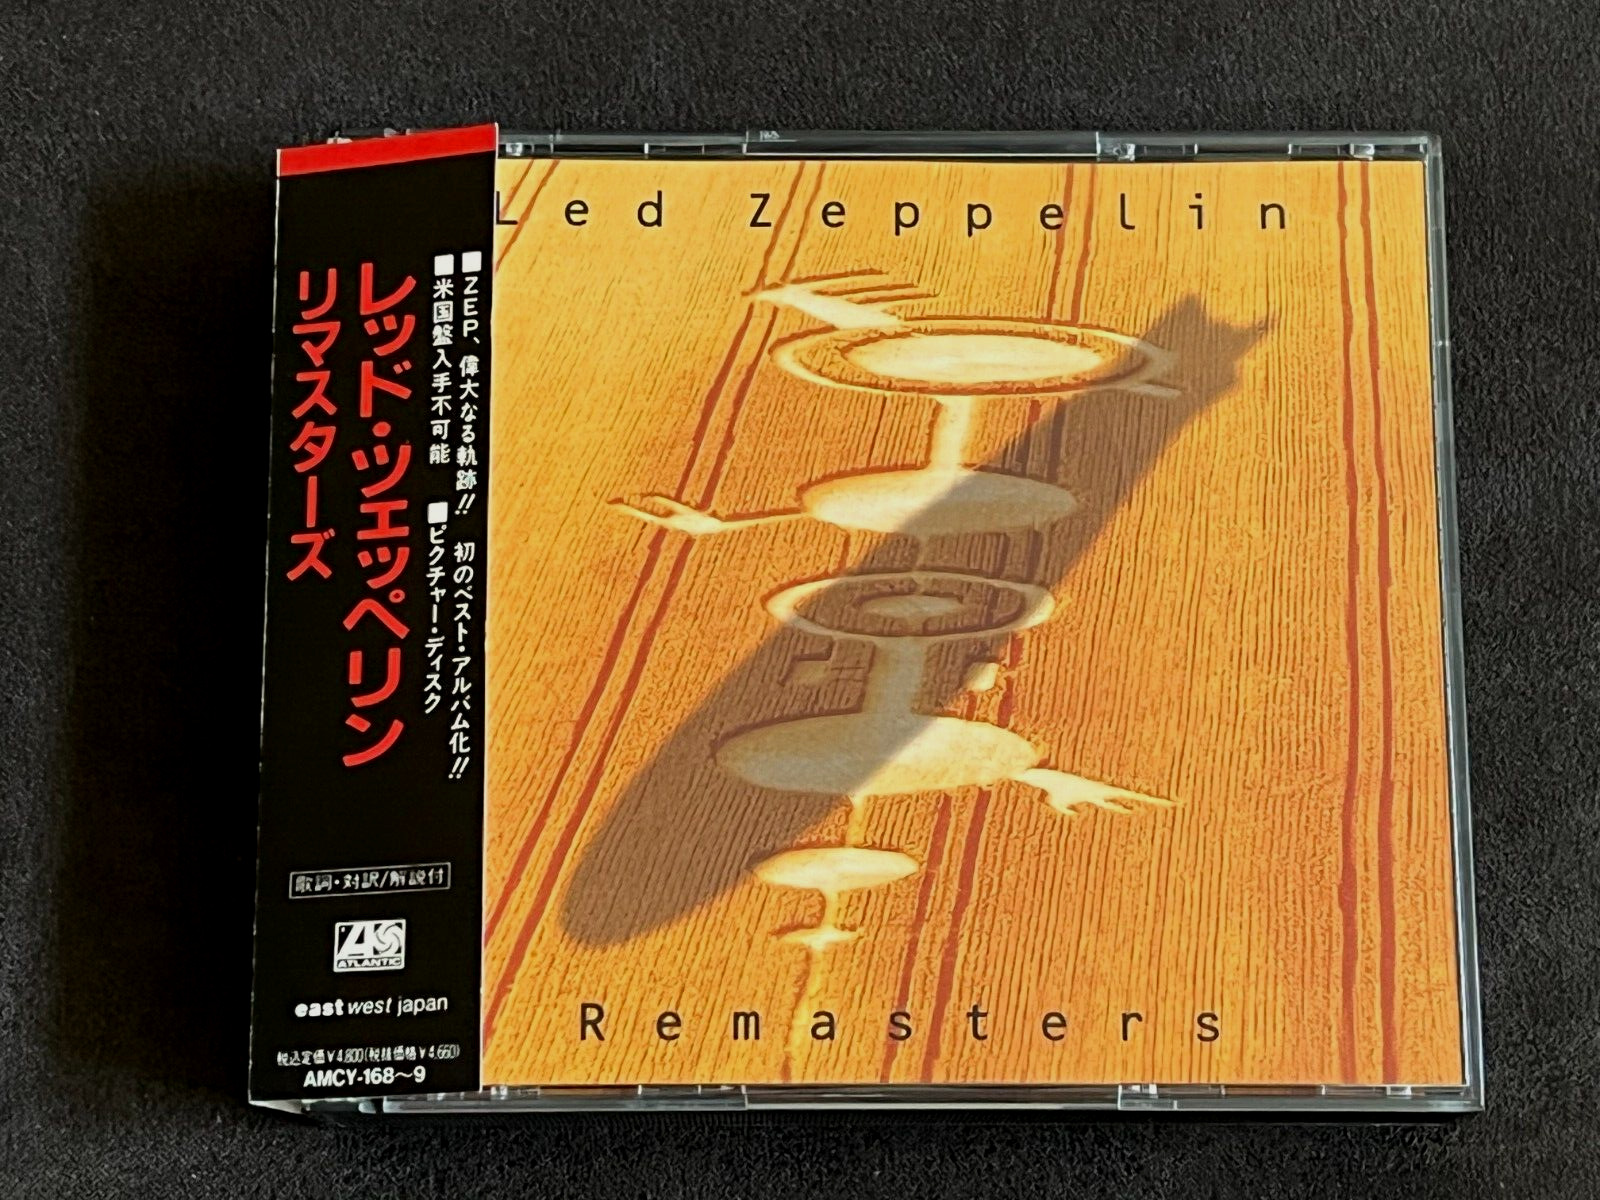 LED ZEPPELIN-Remasters-1990 2CD Japan